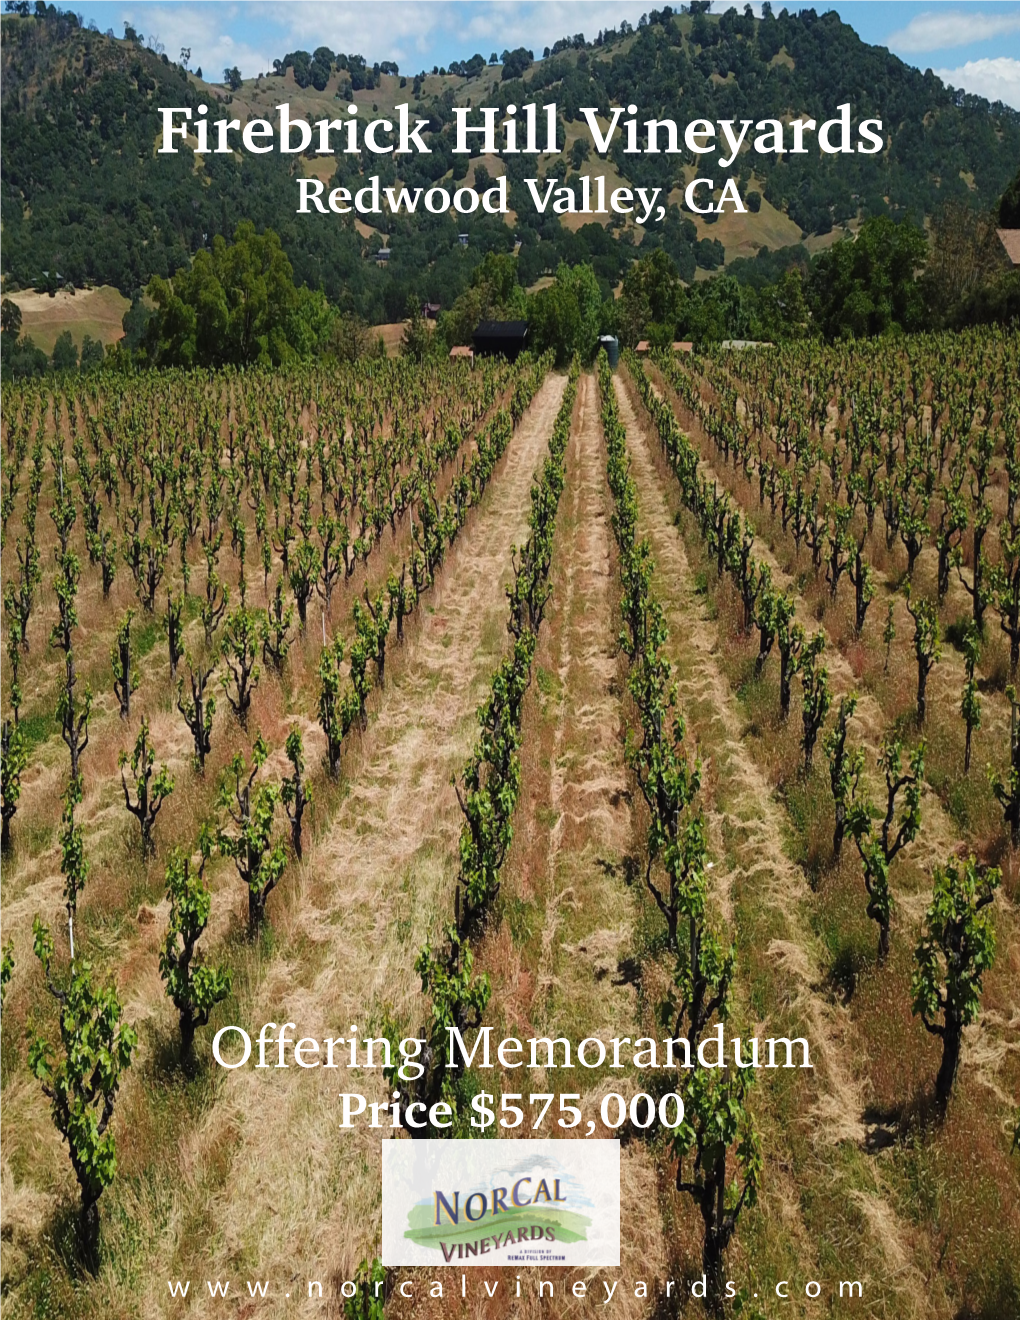 Firebrick Hill Vineyards Redwood Valley, CA